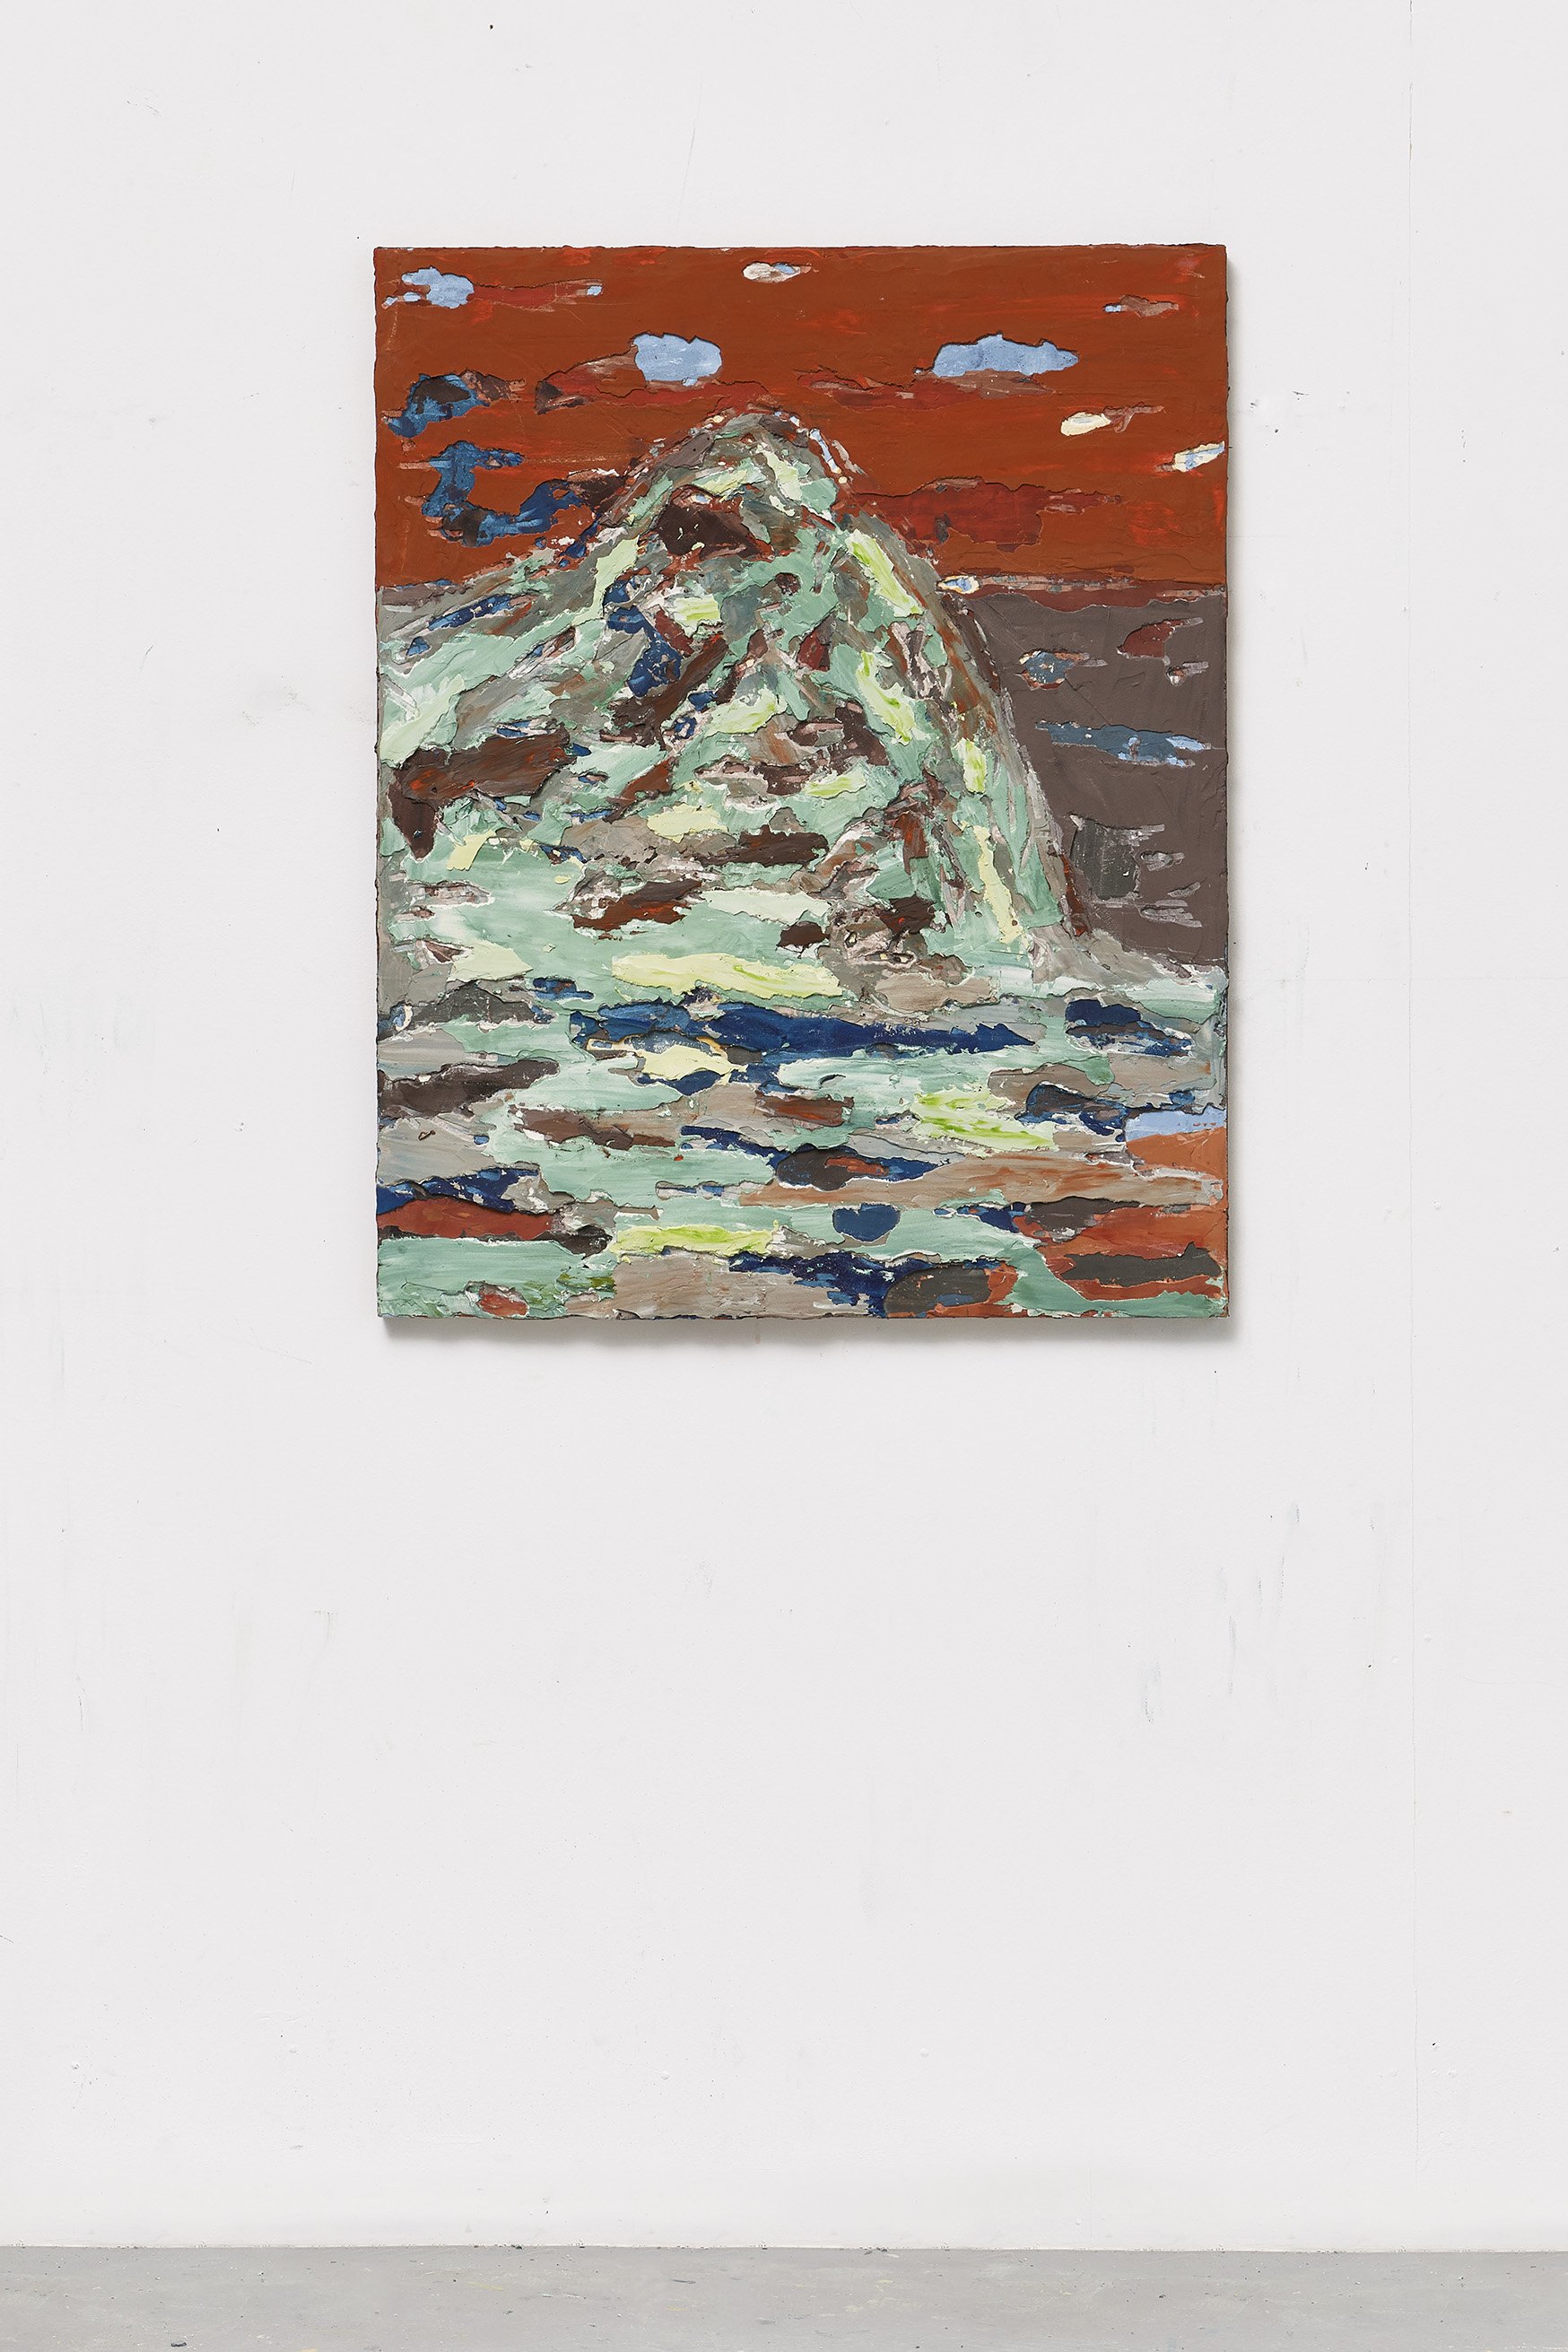   Ruine paysage, montagne   Paint, pigment coating &amp; excavation on canvas   92 x 73 cm   INQUIRY  